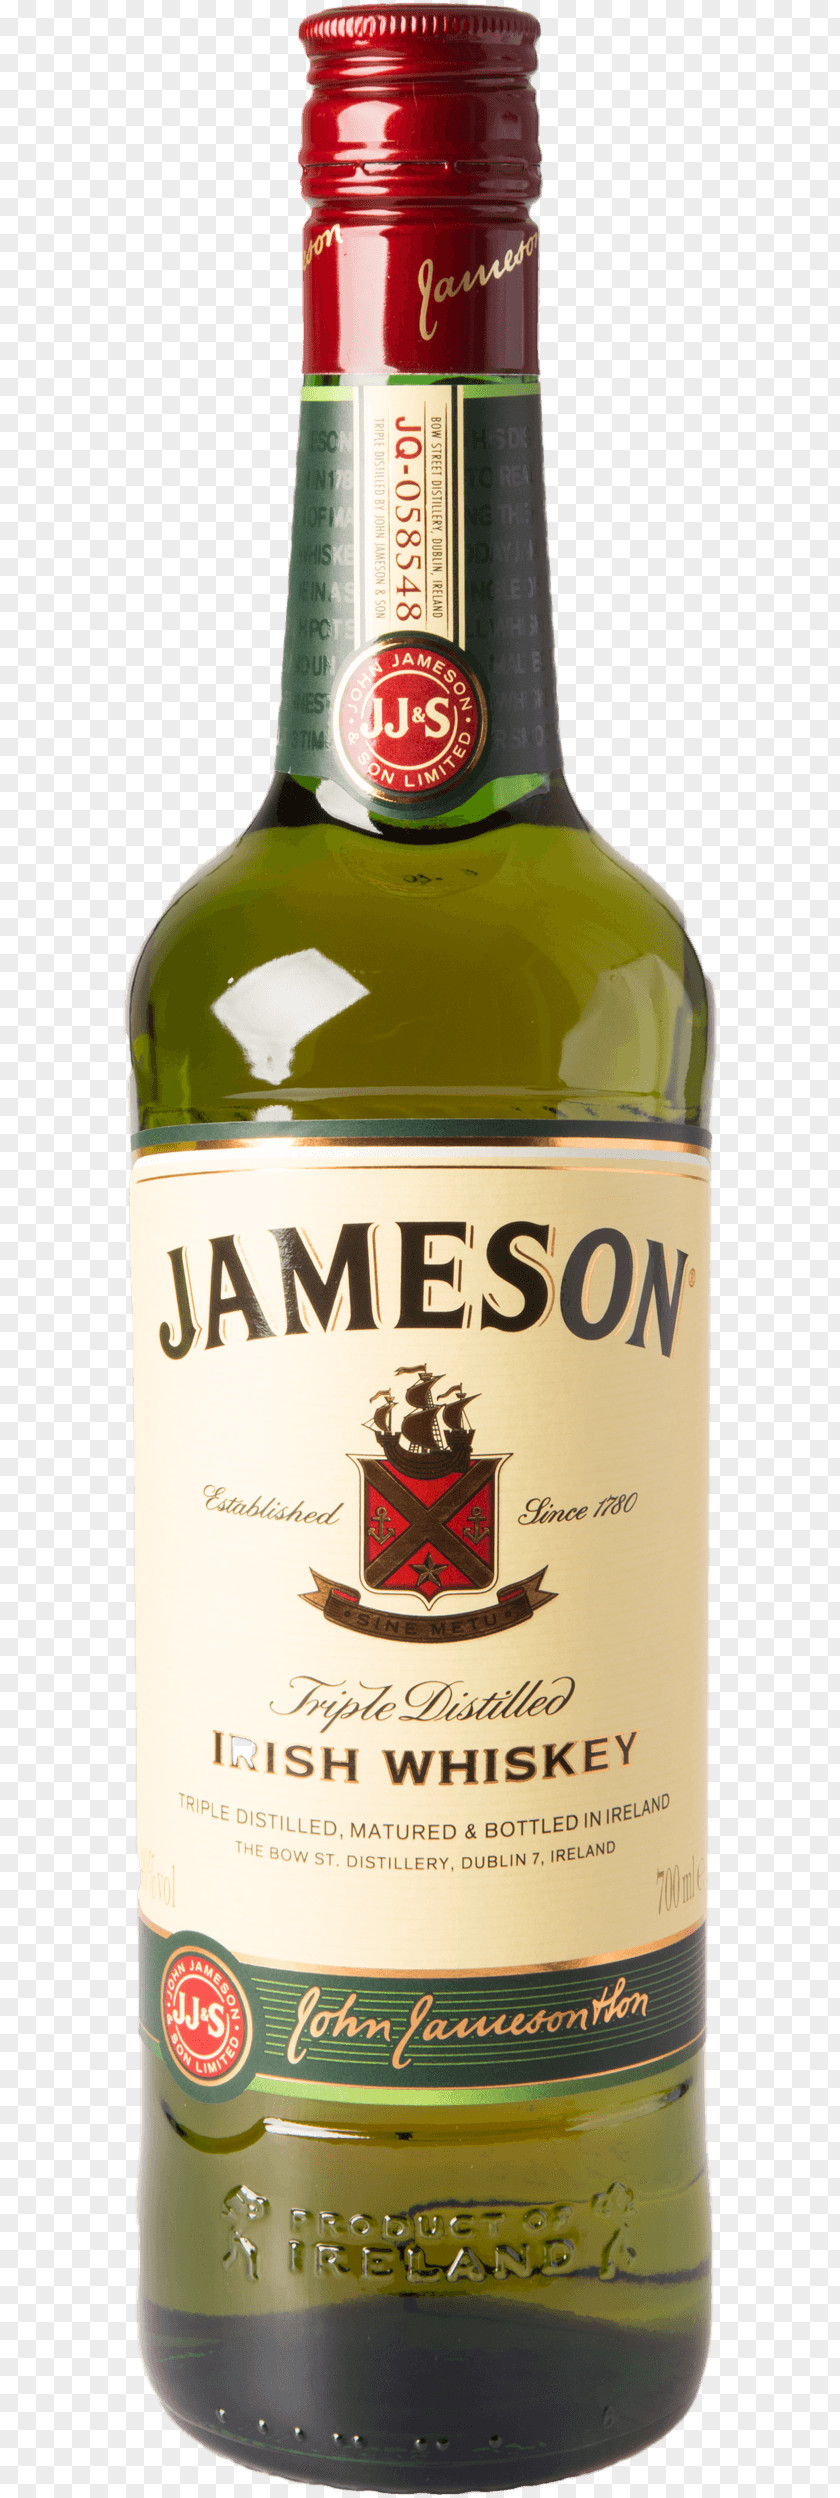 Drink Jameson Irish Whiskey Bourbon Old Bushmills Distillery PNG